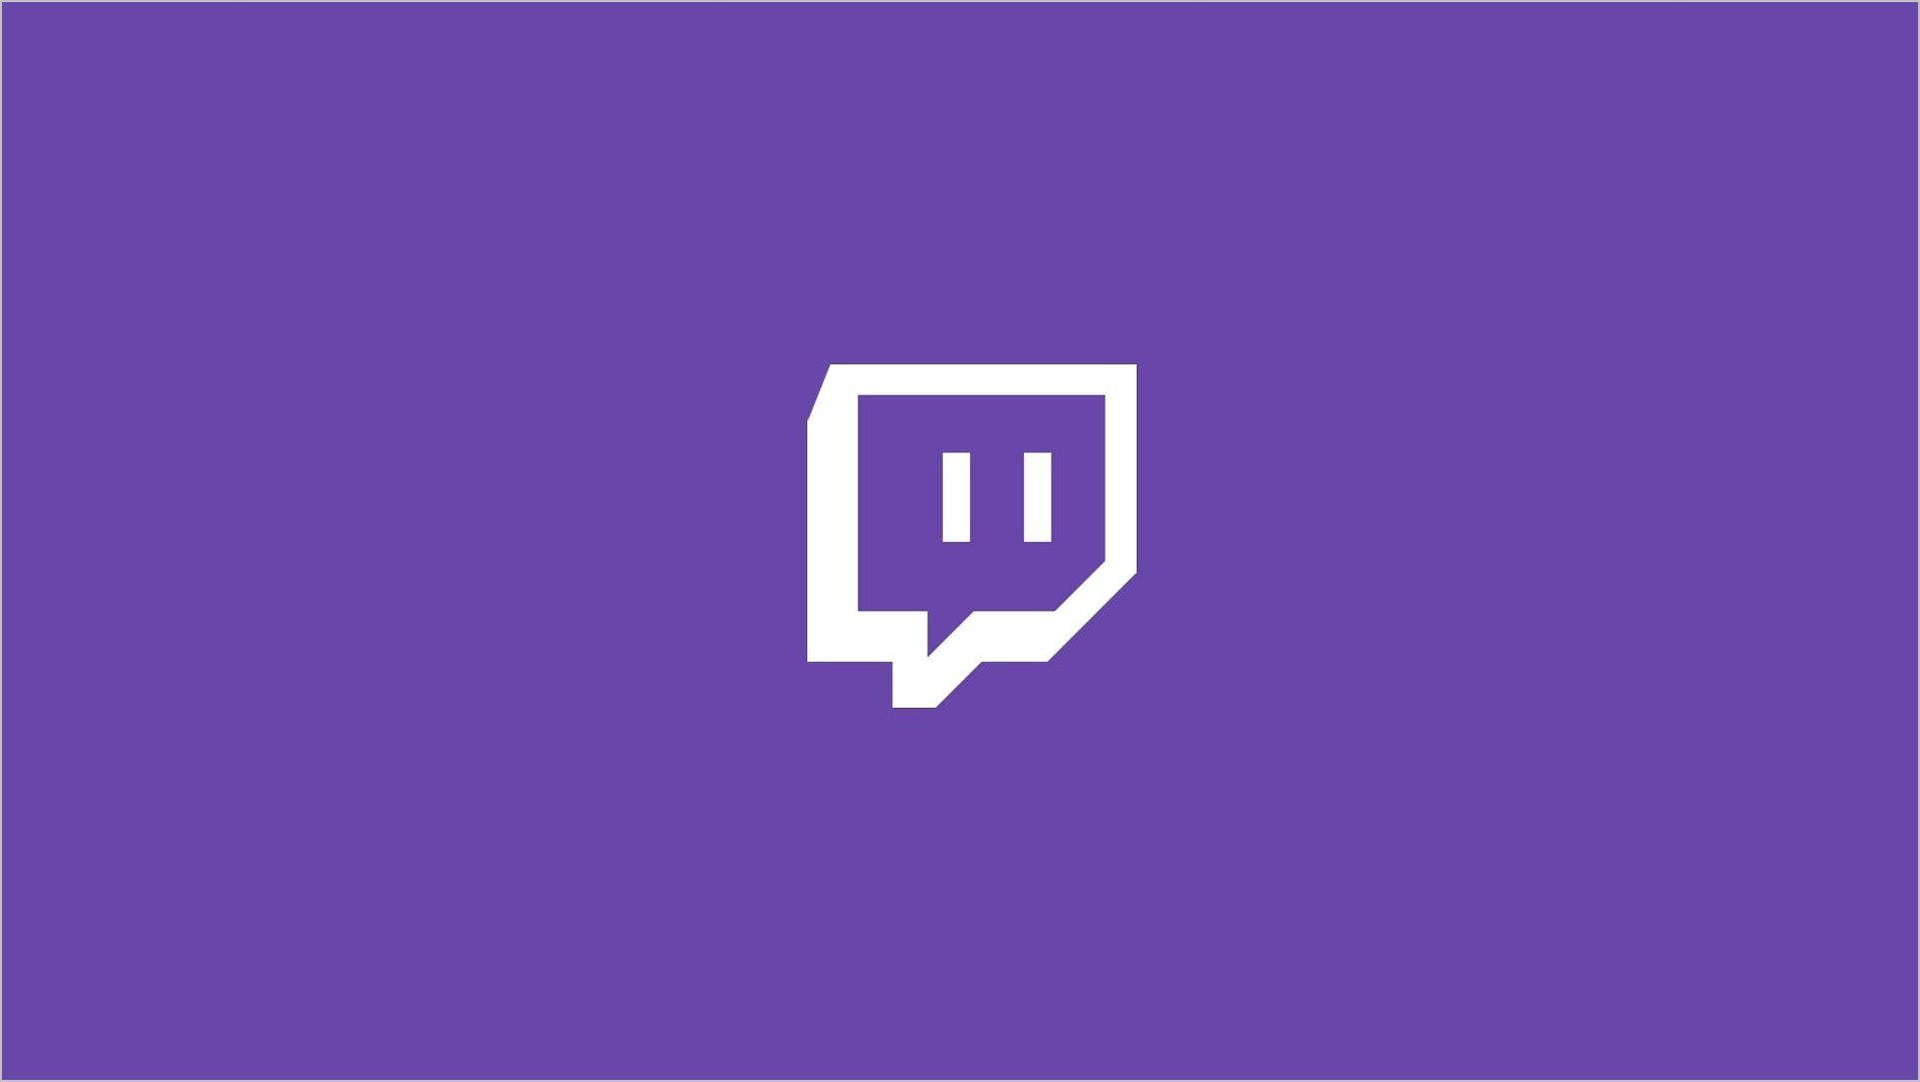 Stream on Twitch in1080 - HD Clarity Wallpaper